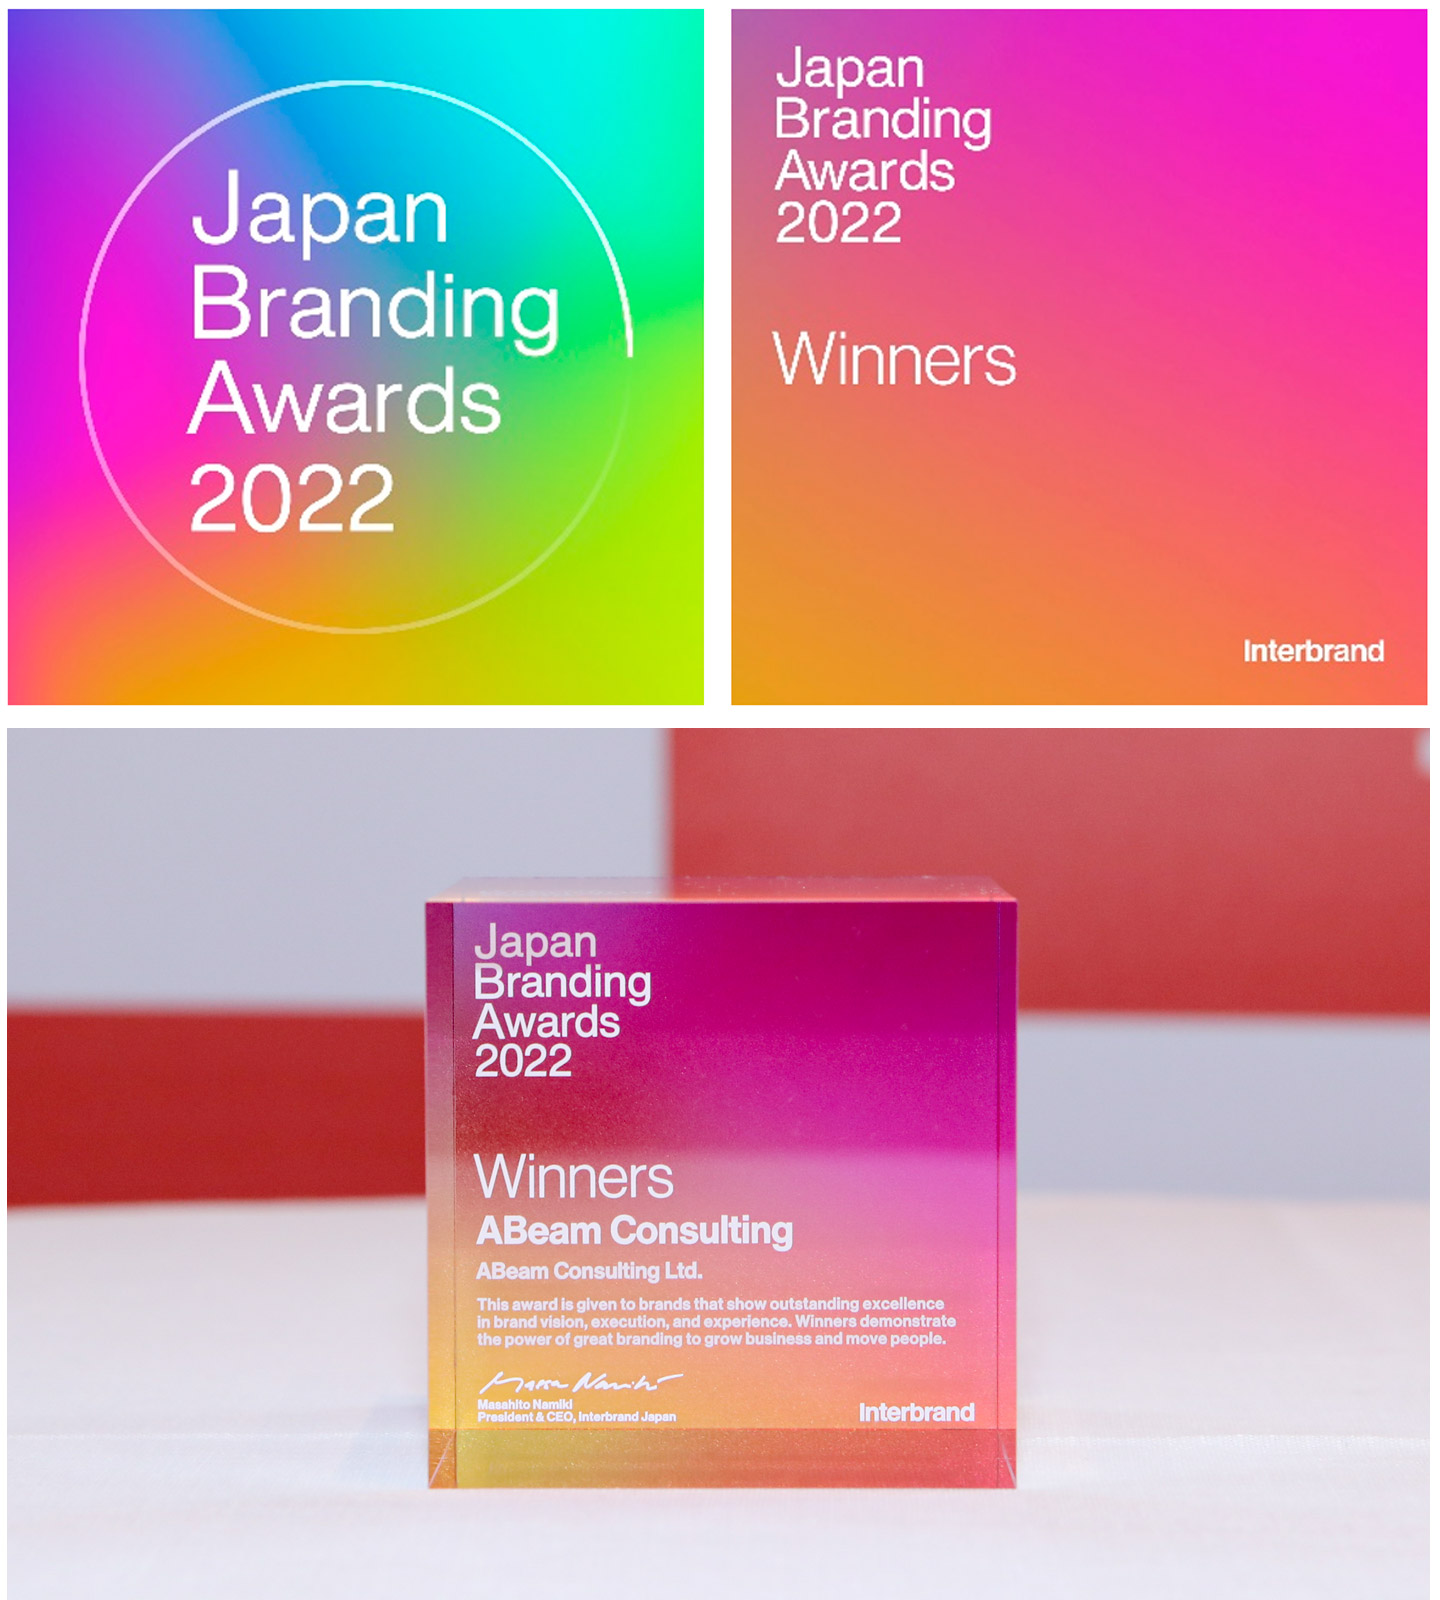 Japan Branding Awards 2022